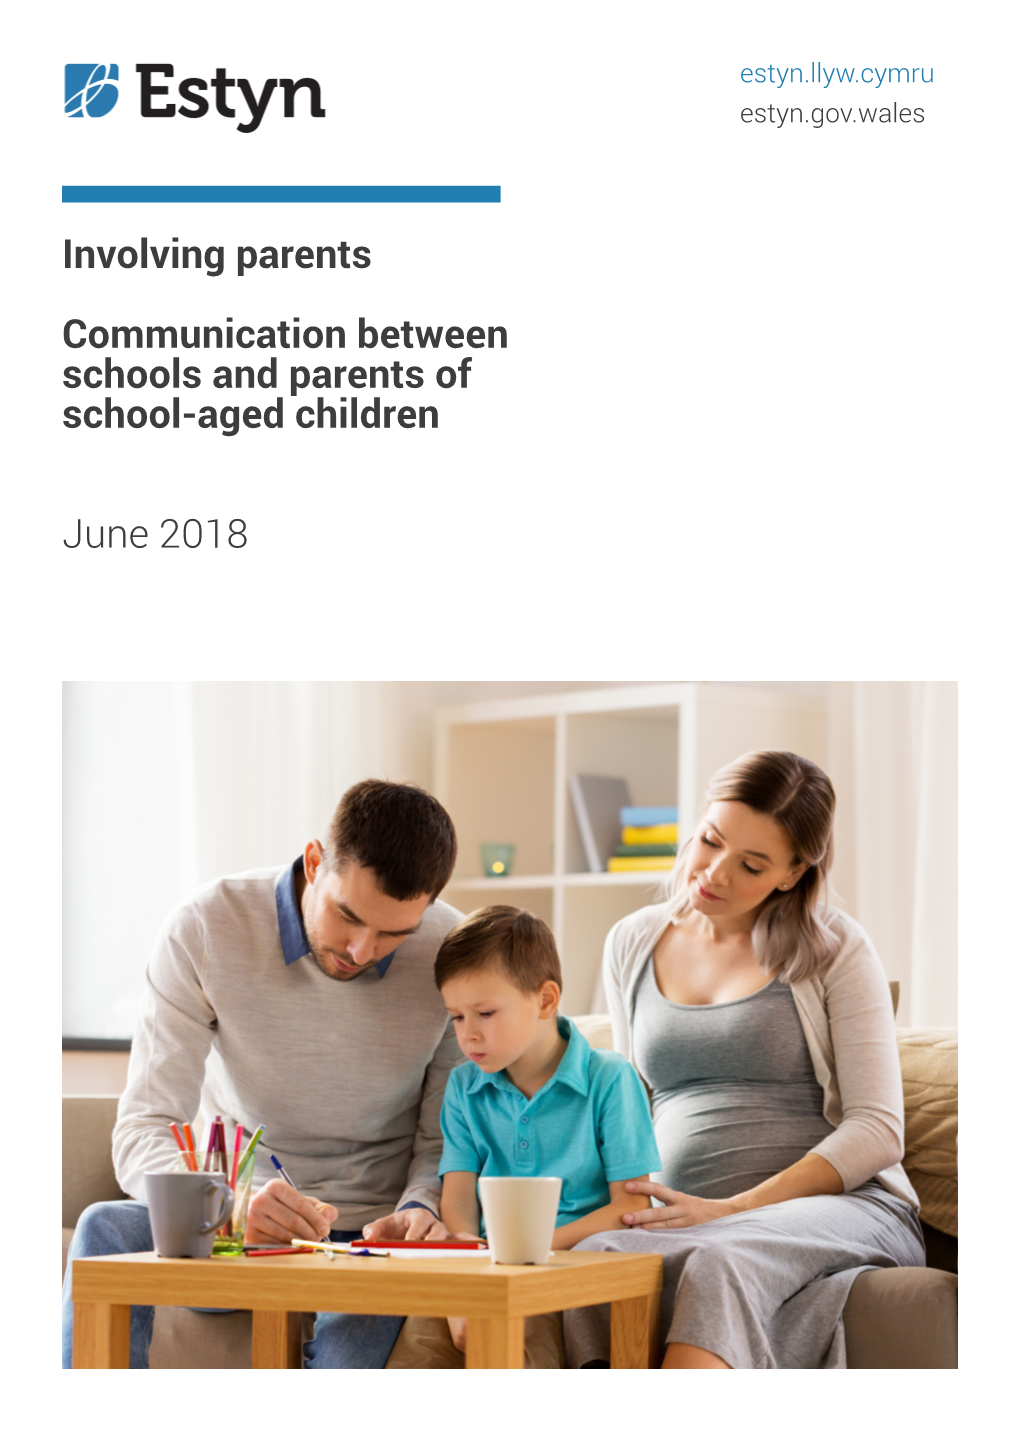 Involving Parents Communication Between Schools and Parents of School-Aged Children